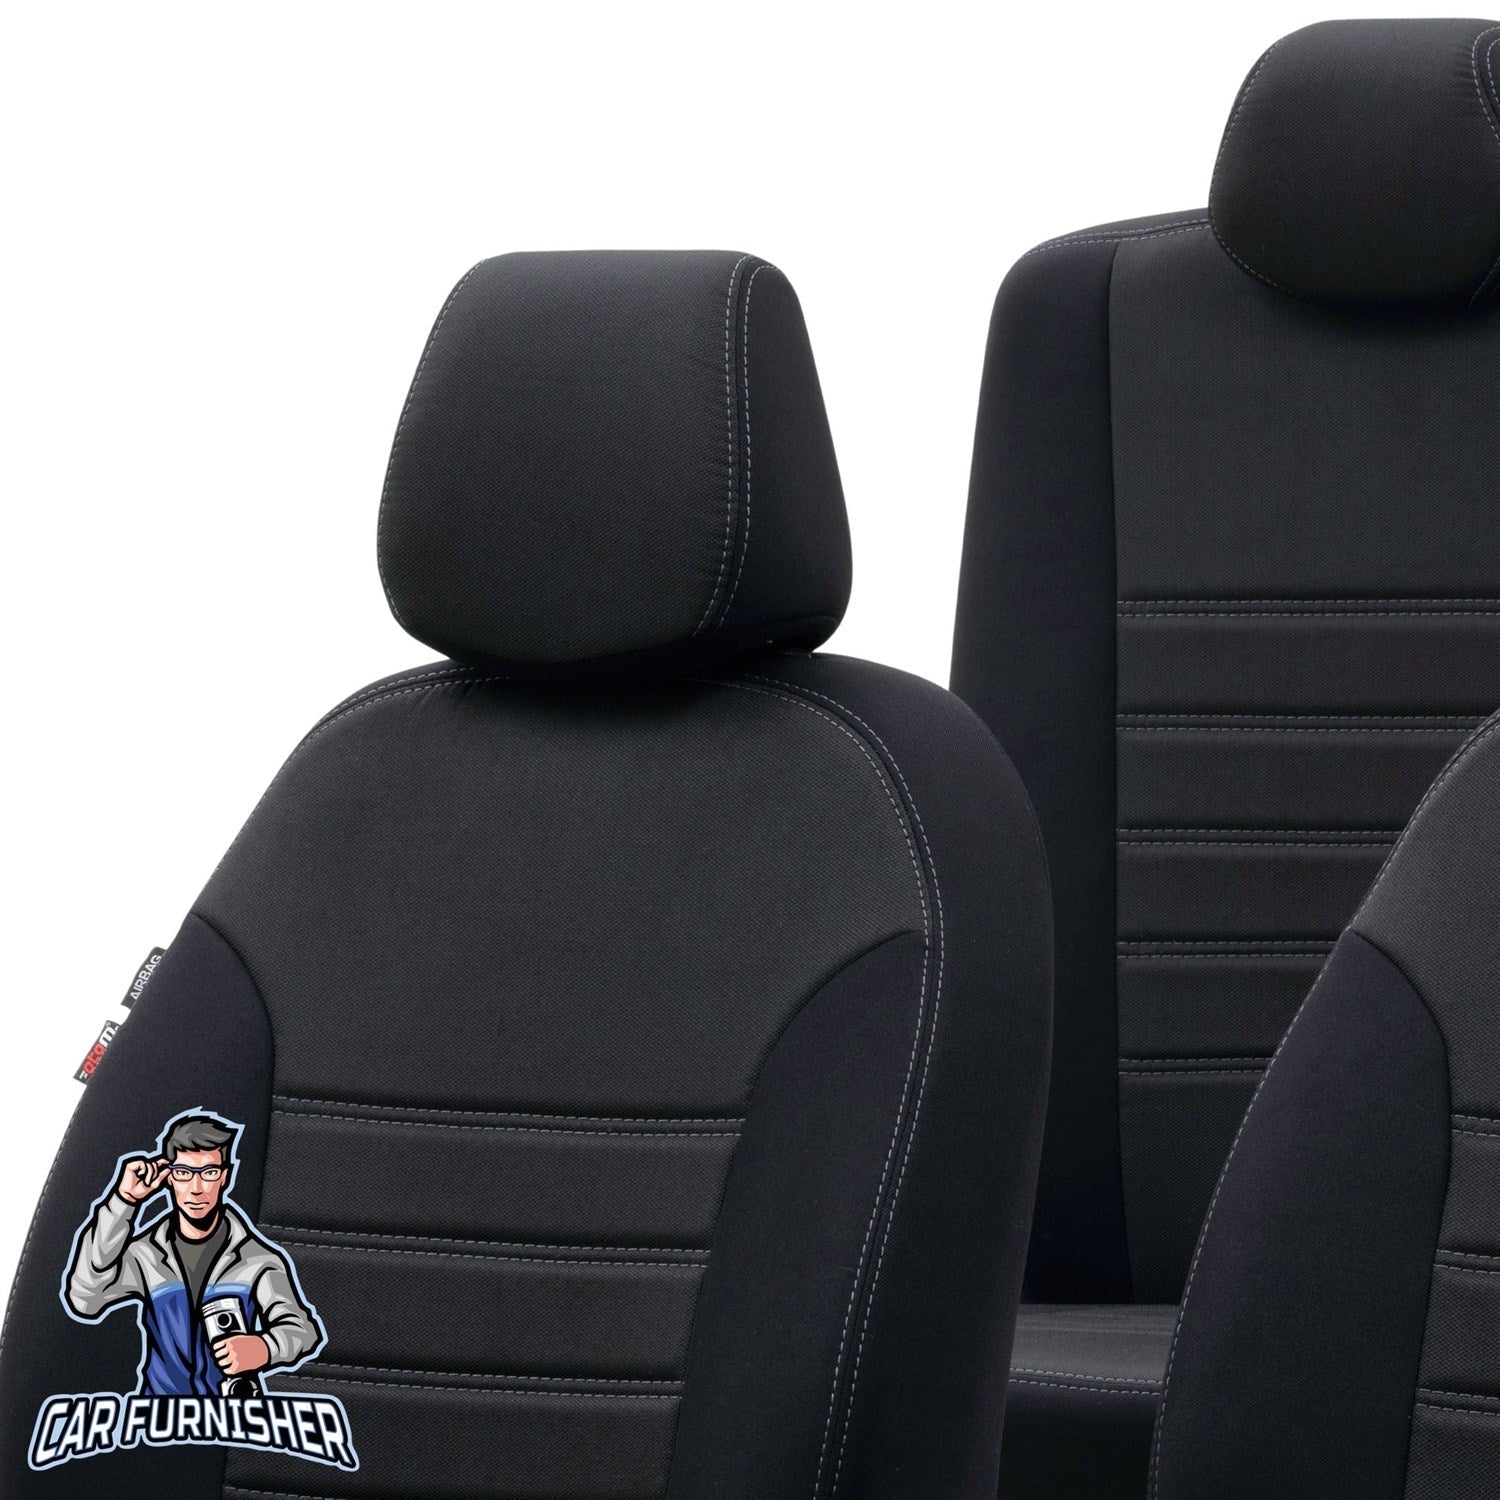 Peugeot 106 Car Seat Covers 1992-2002 Original Design Black Full Set (5 Seats + Handrest) Fabric